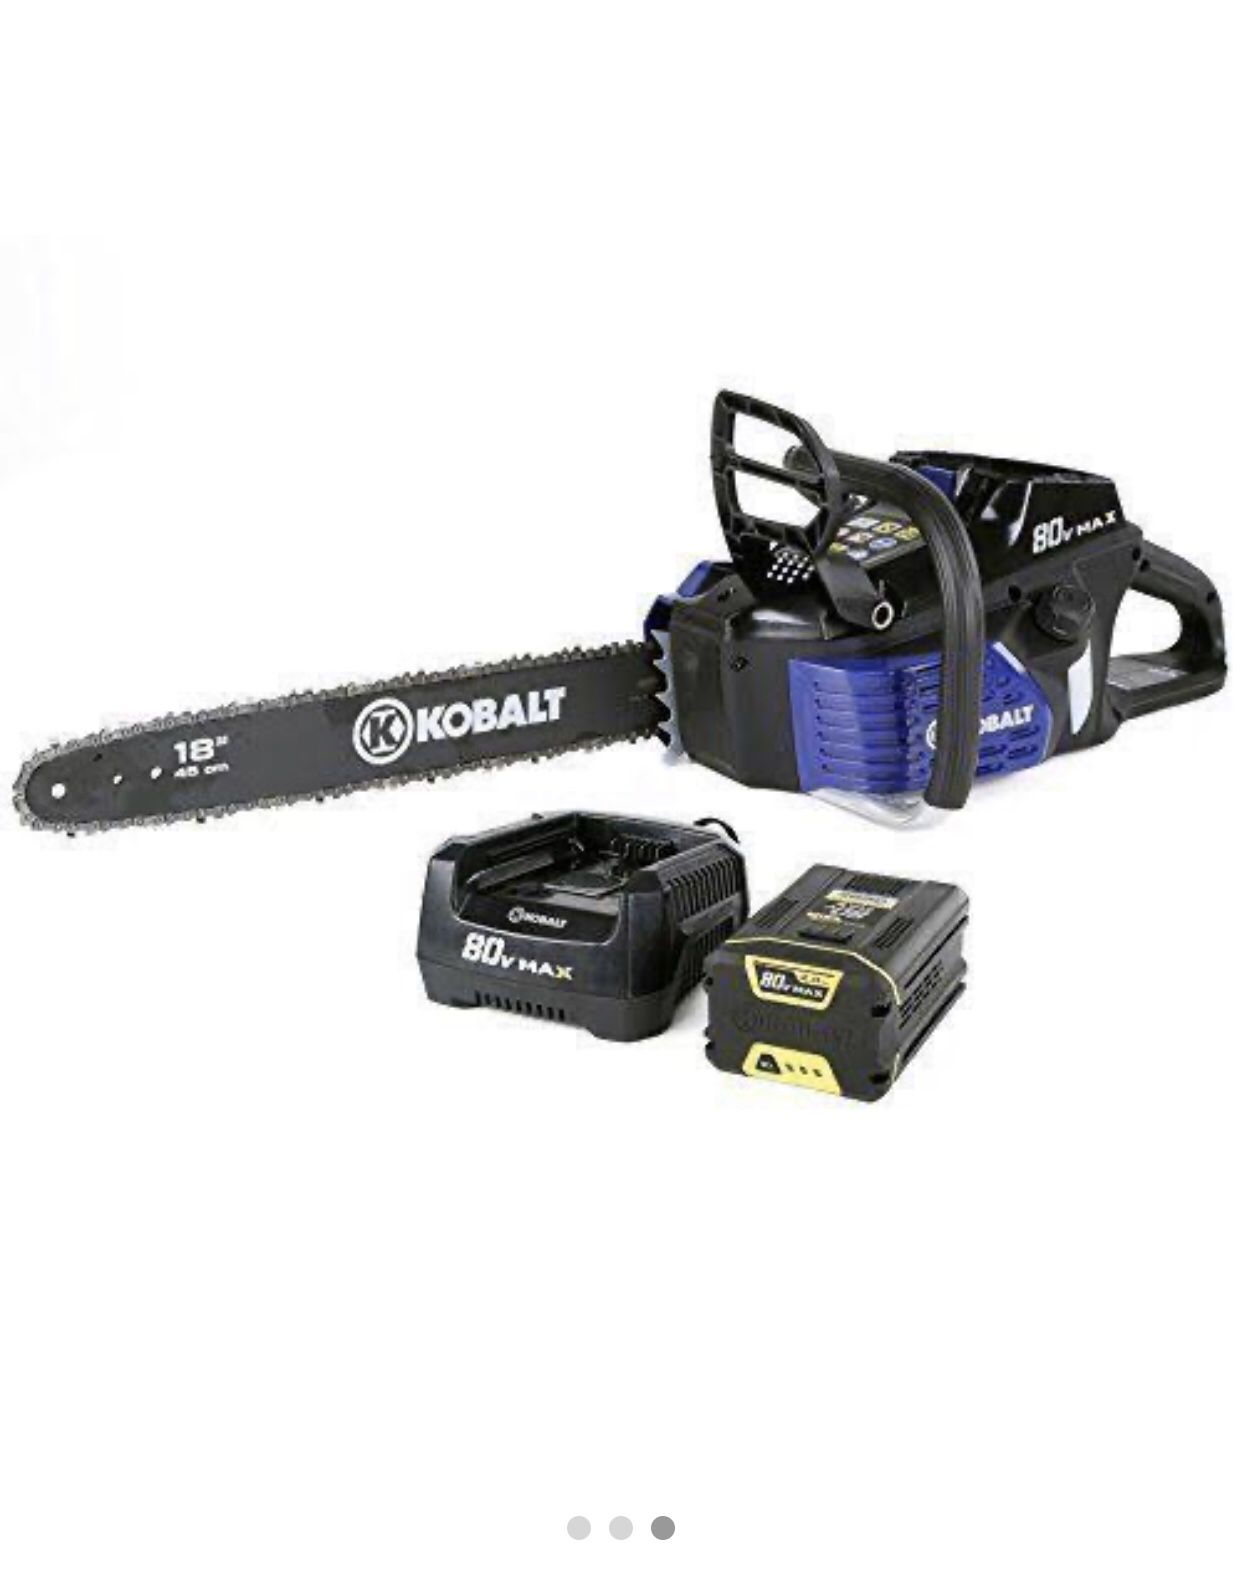 Kobalt 80v Max 18” electric chainsaw